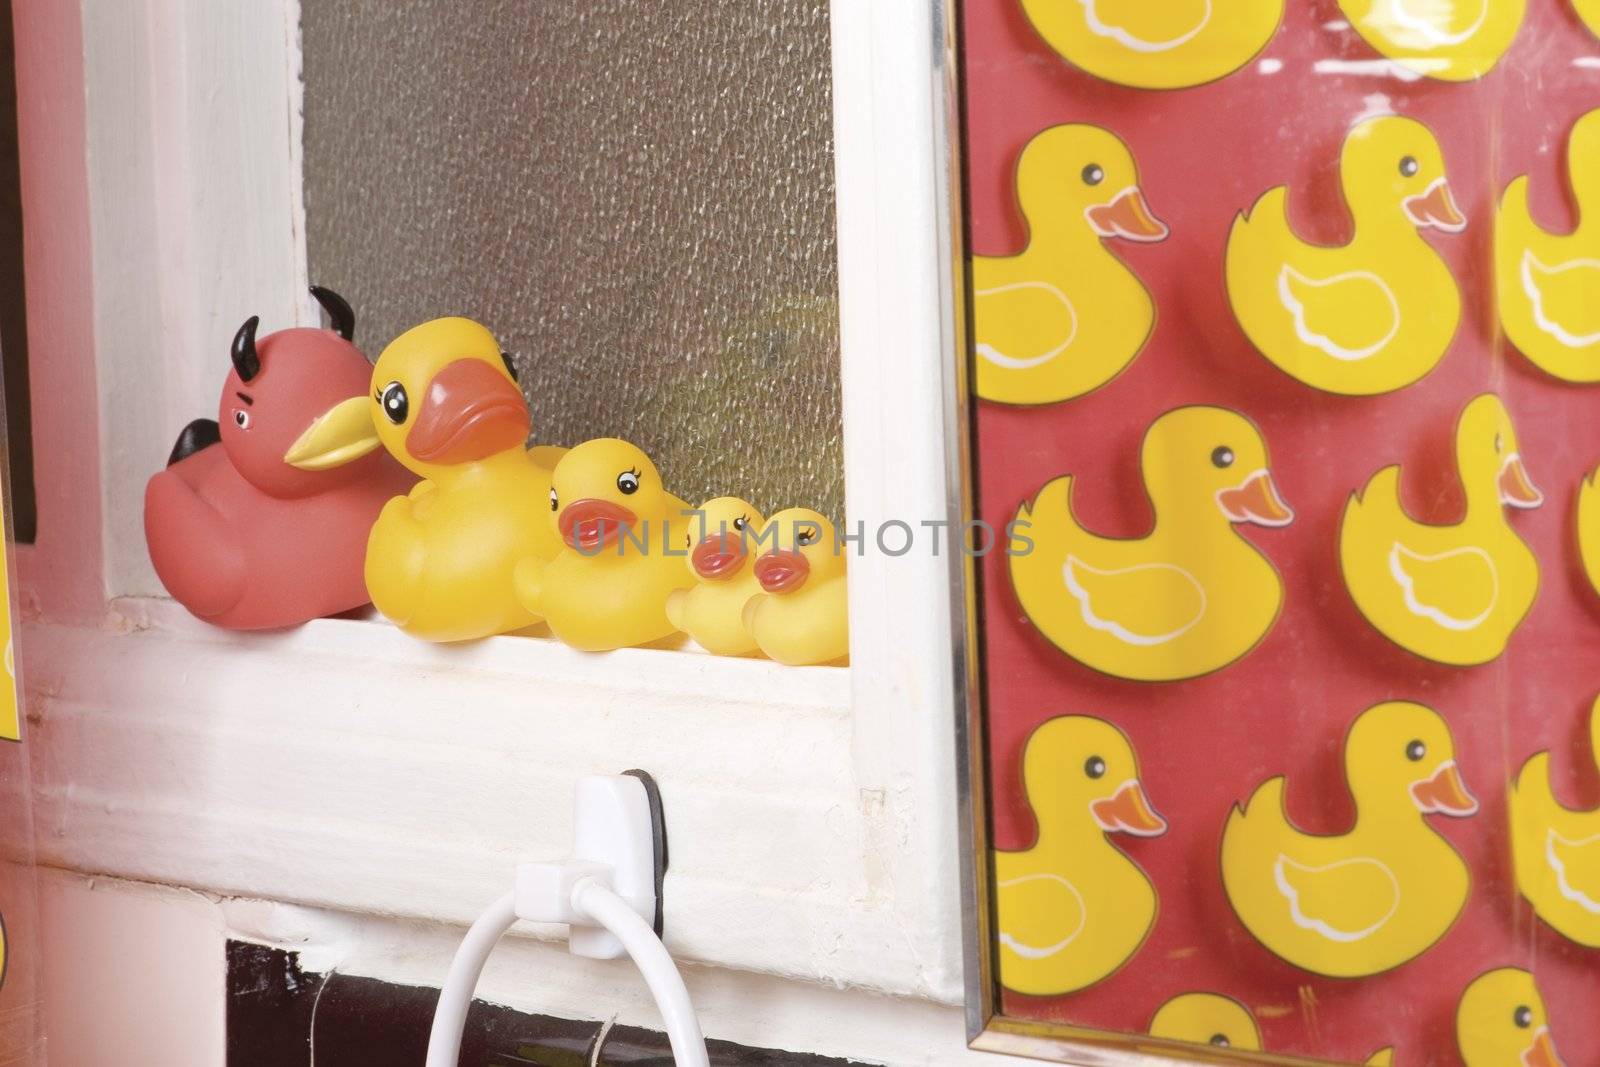 Rubber ducky on window ledge by mypstudio